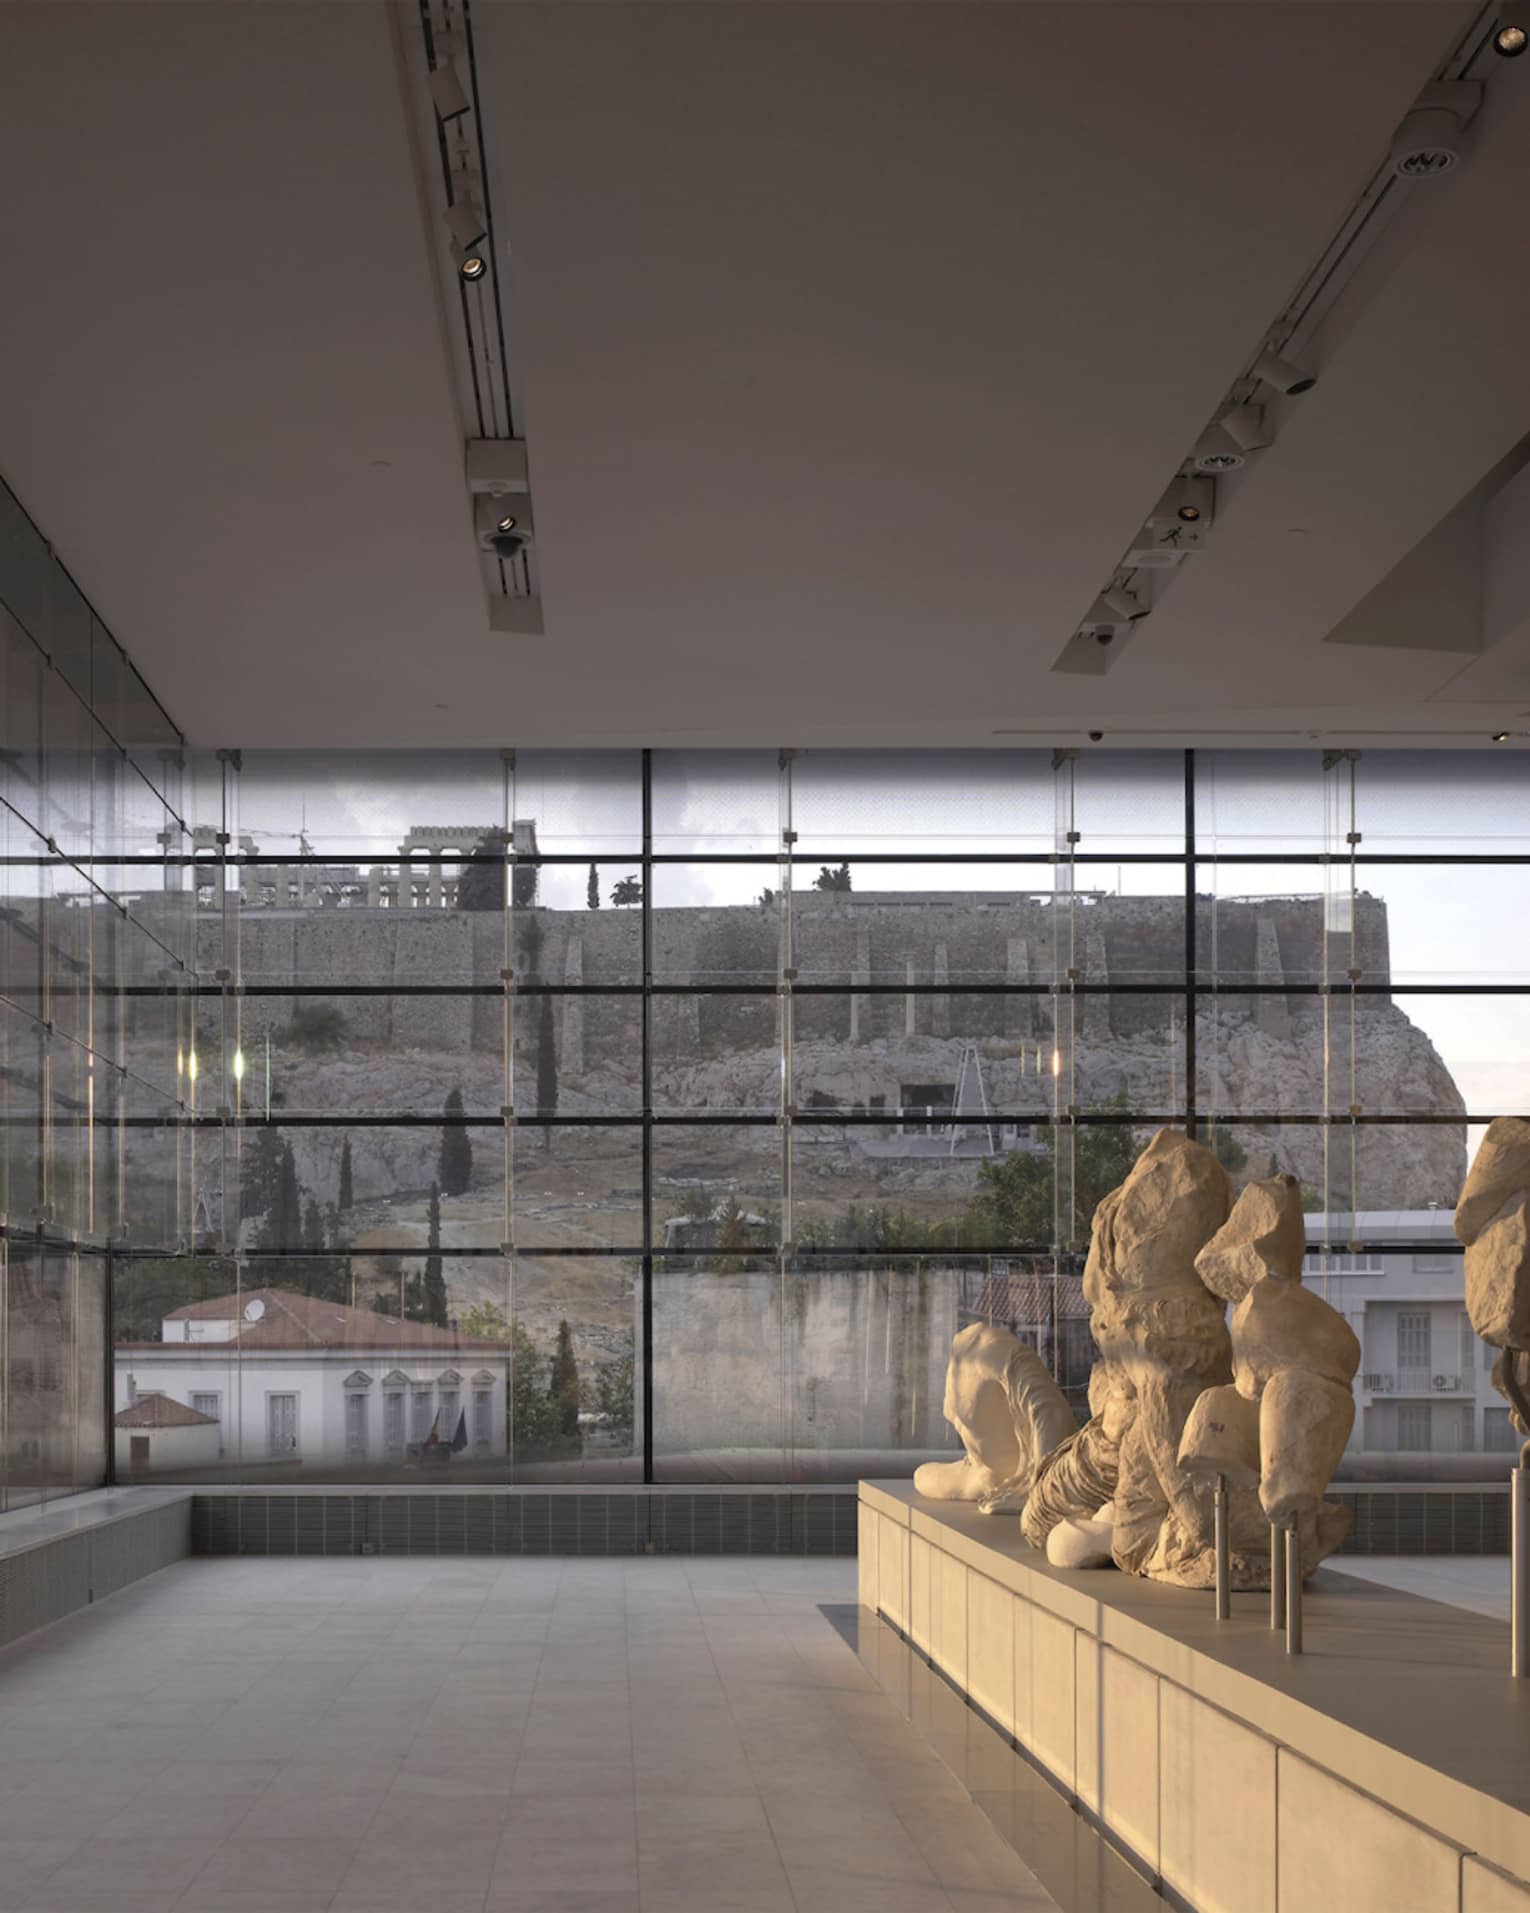 Greek sculptures on display in glass room overlooking ruins at Acropolis Museum